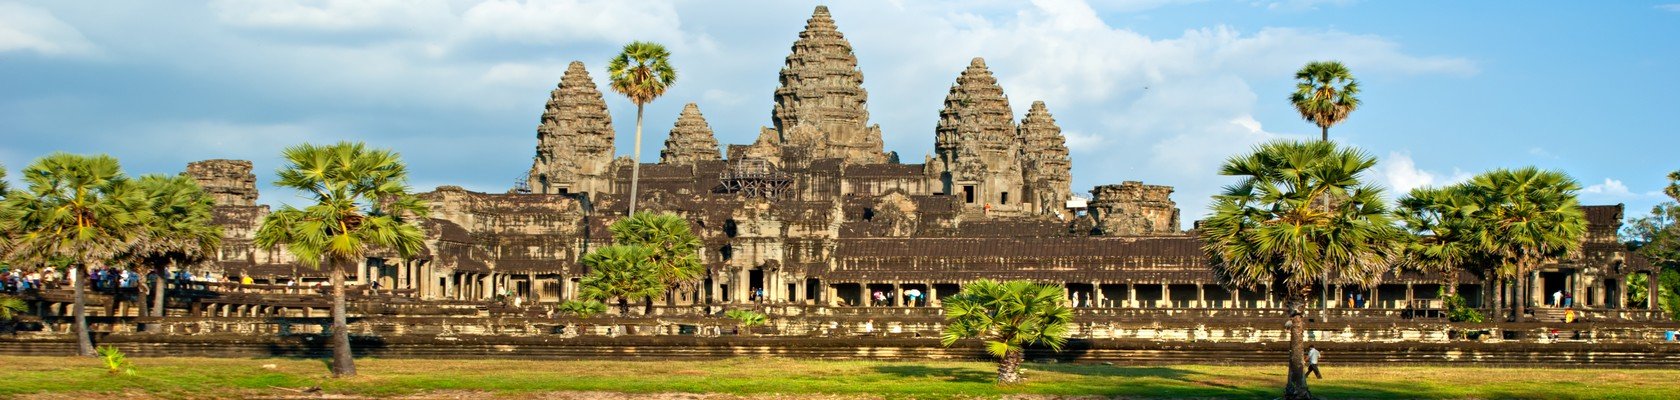 Tempelcomplex Angkor Wat